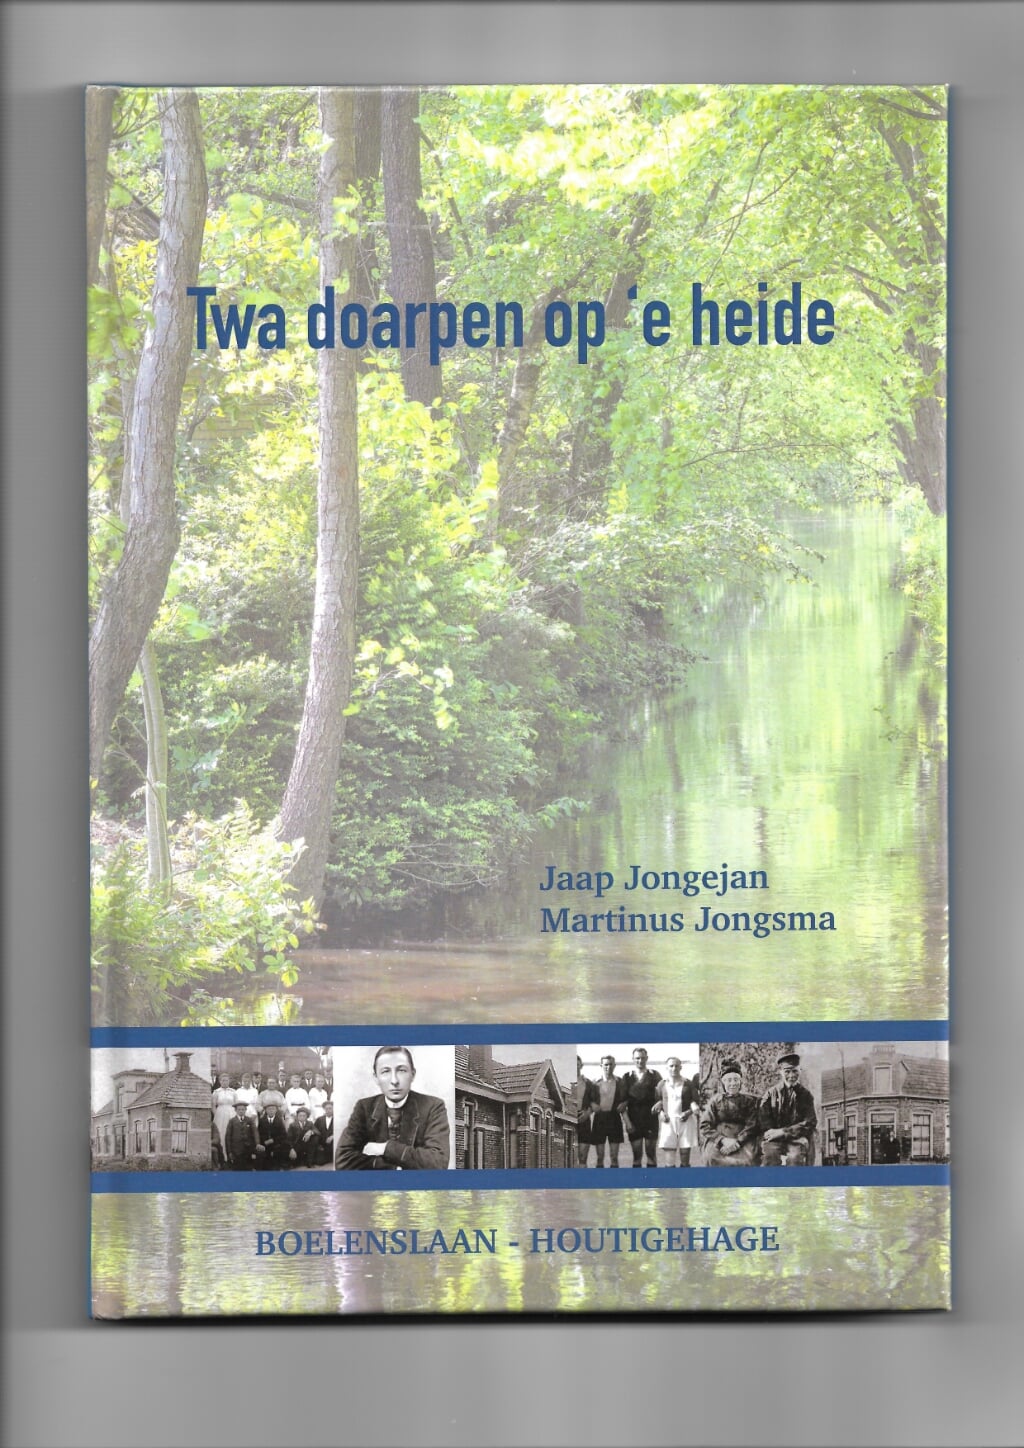 Het jubileumboek Twa Doarpen op 'e heide. 